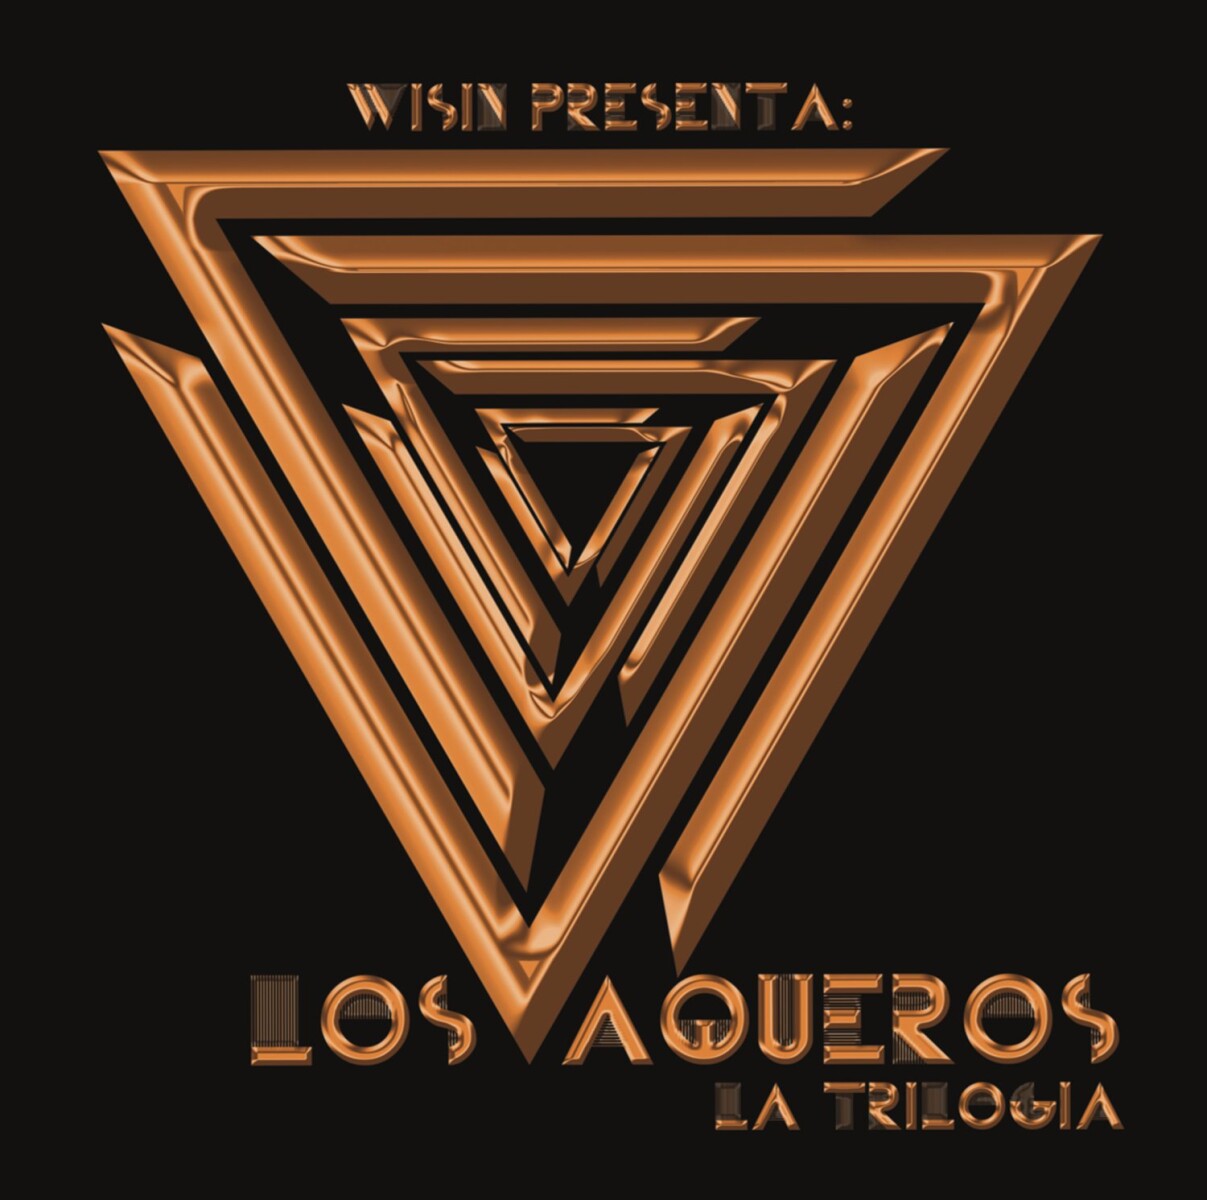 (l) Wisin-los Vaqueros: La Trilogia - Cd 